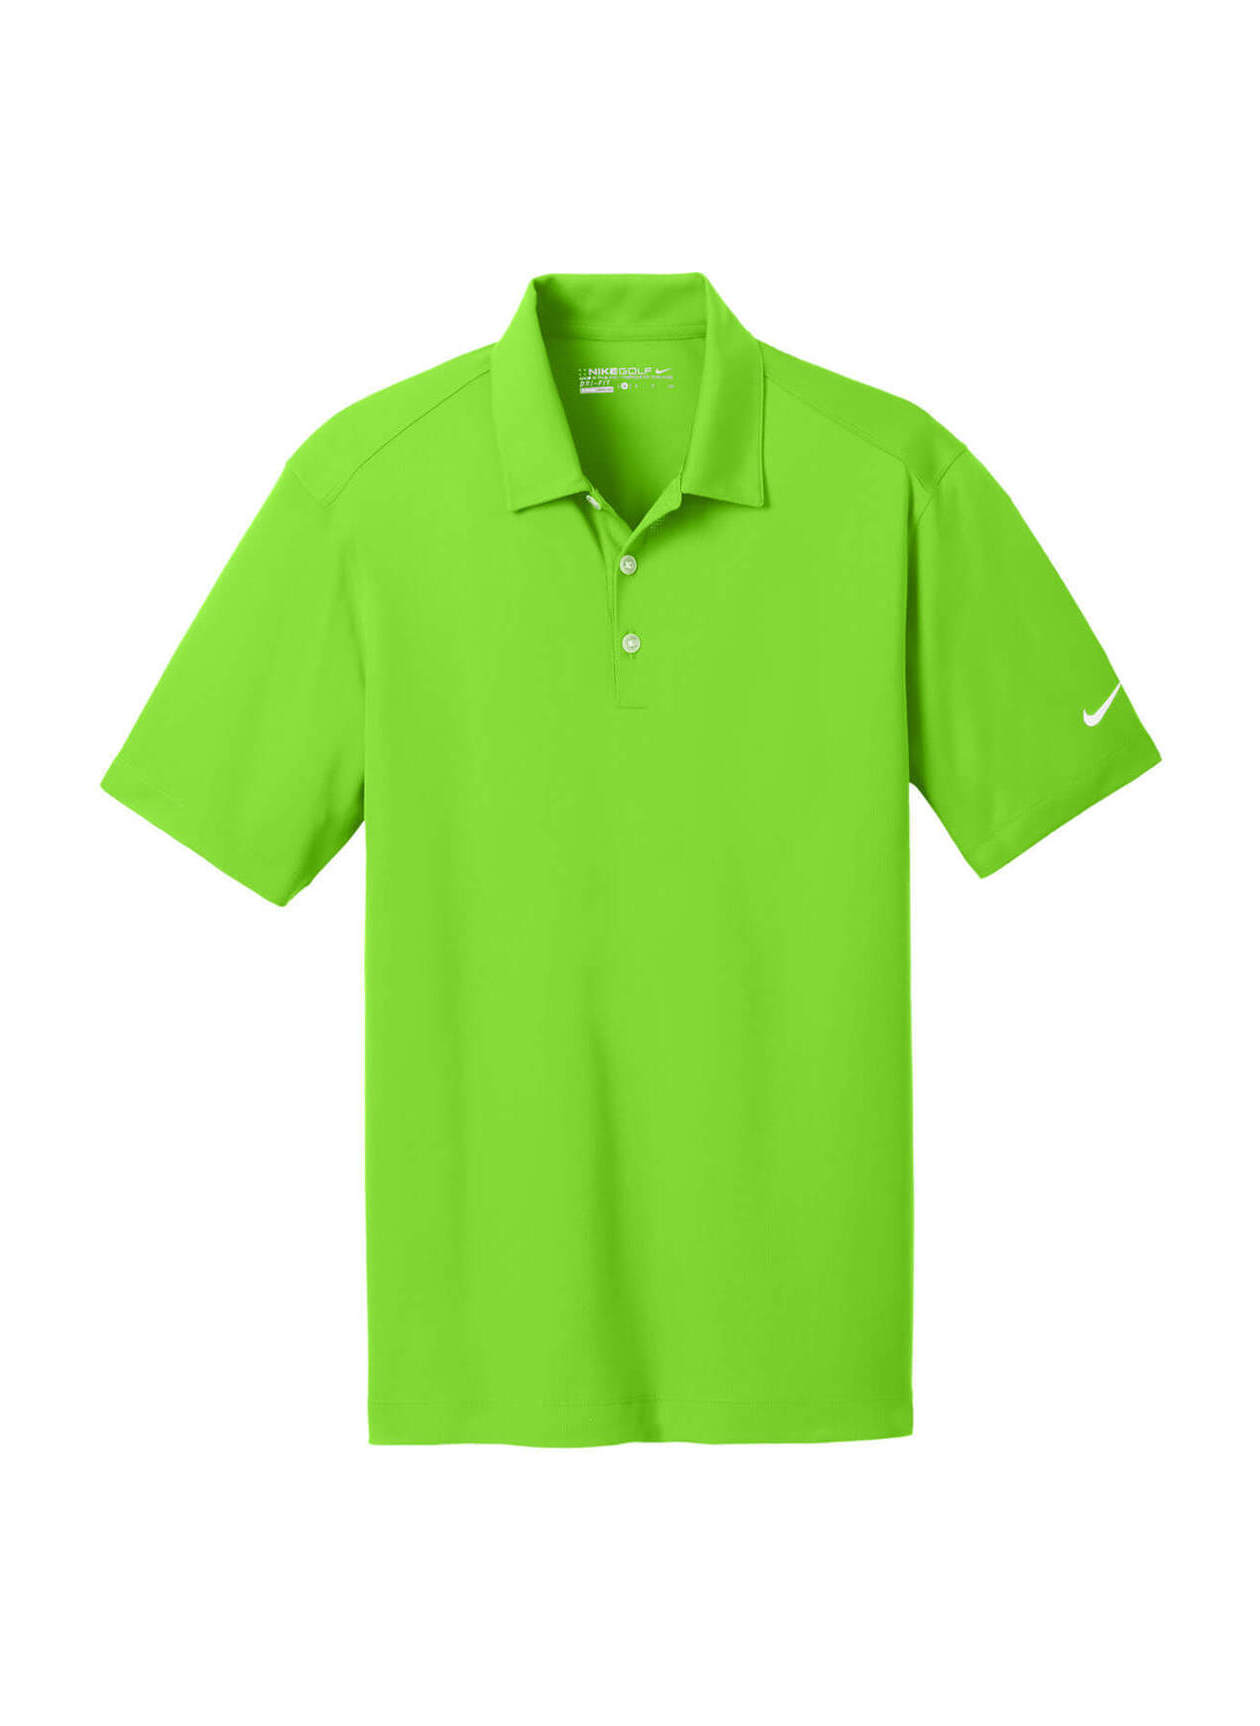 Nike Men's Action Green Dri-FIT Vertical Mesh Polo | Custom Logo Polo ...